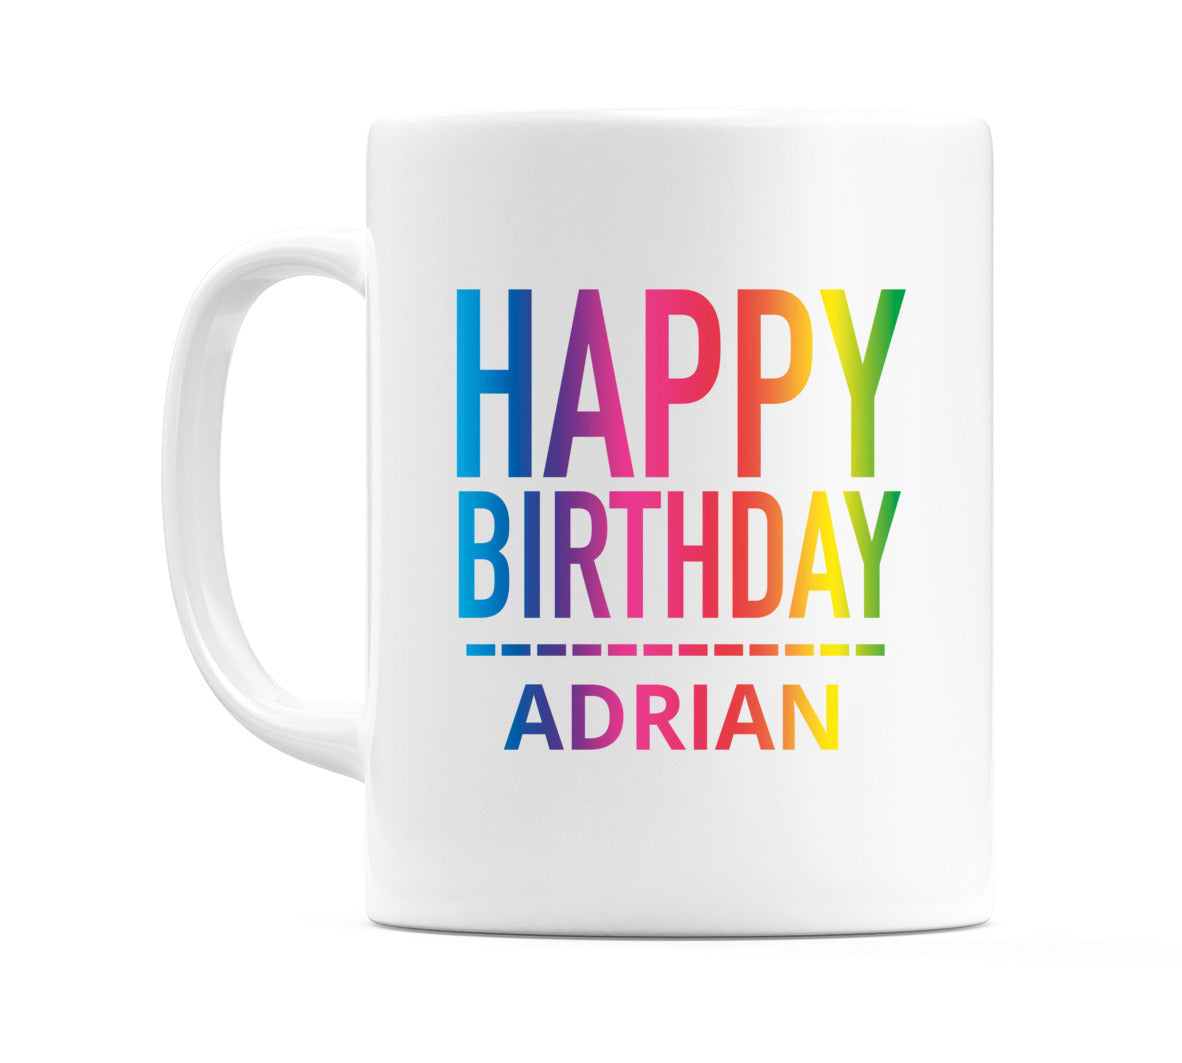 Happy Birthday Adrian (Rainbow) Mug Cup by WeDoMugs